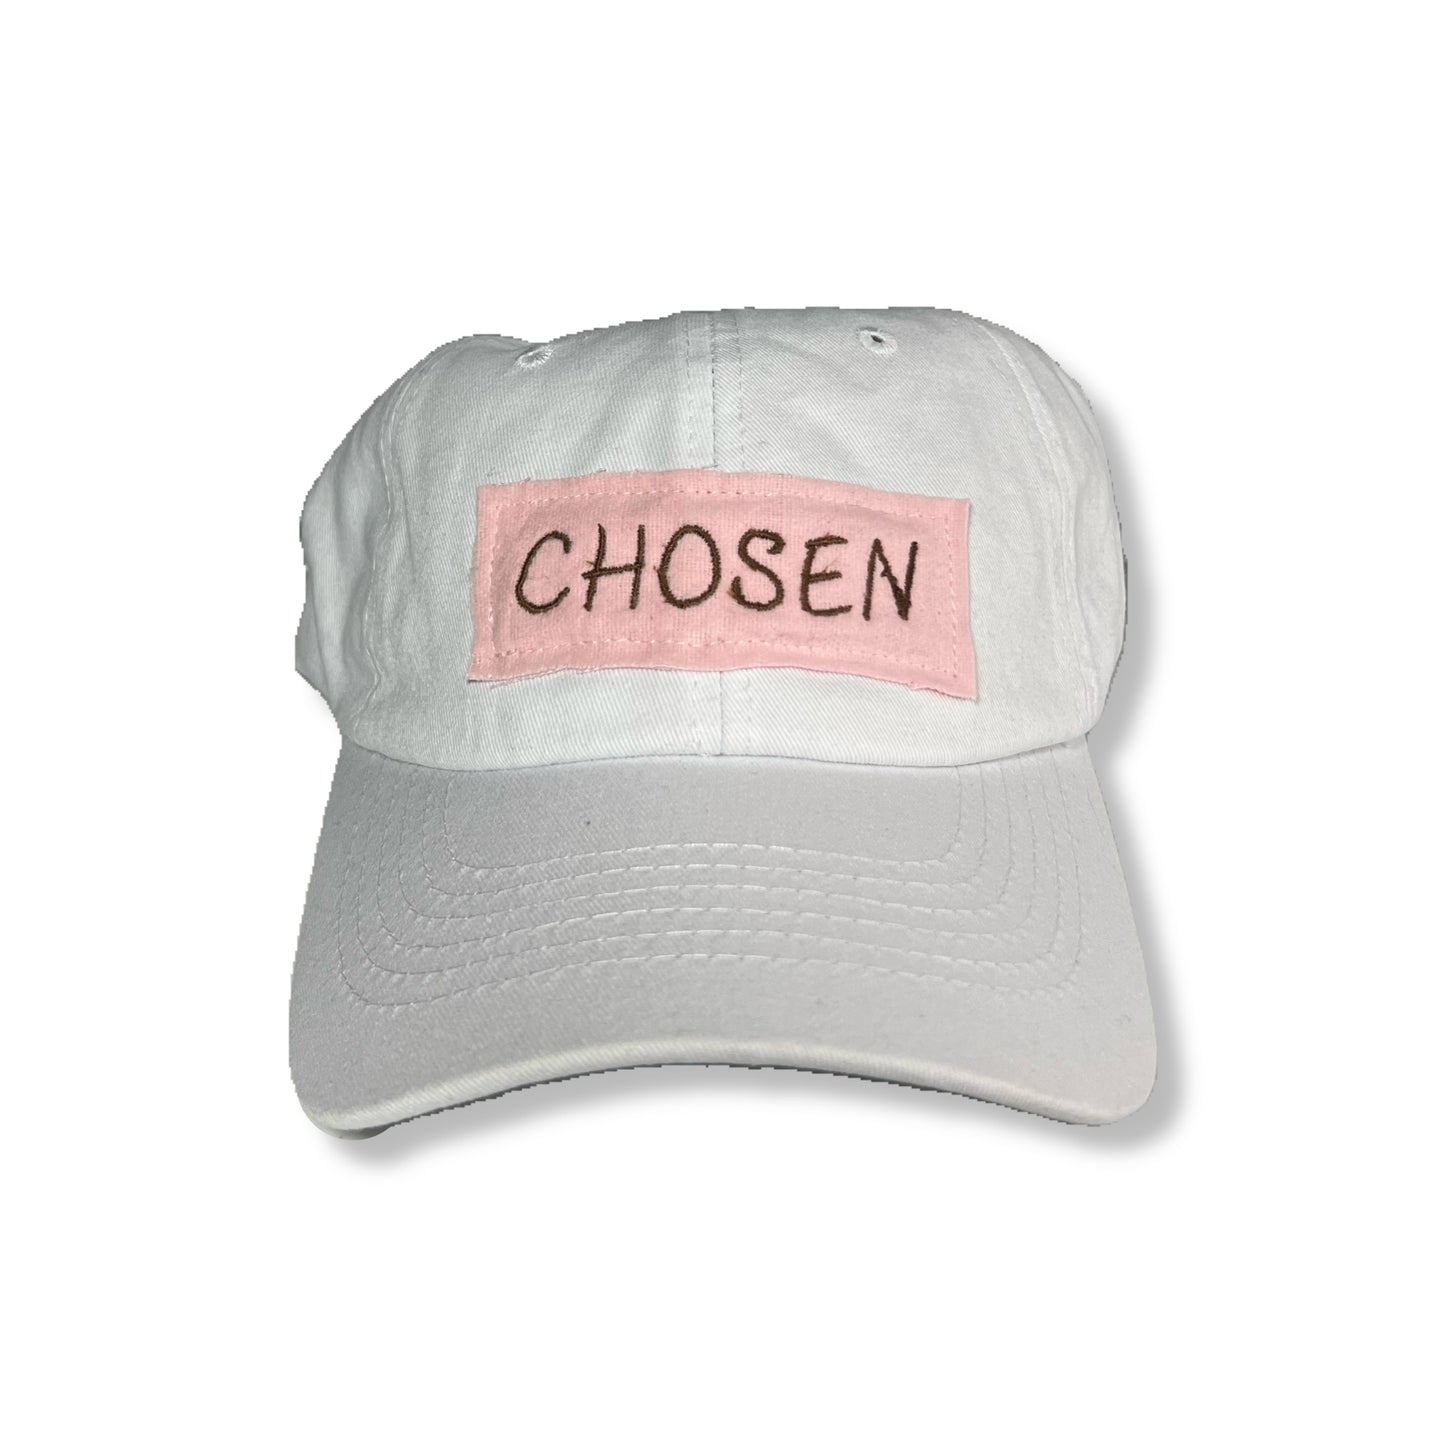 “Neapolitan” Chosen Hat